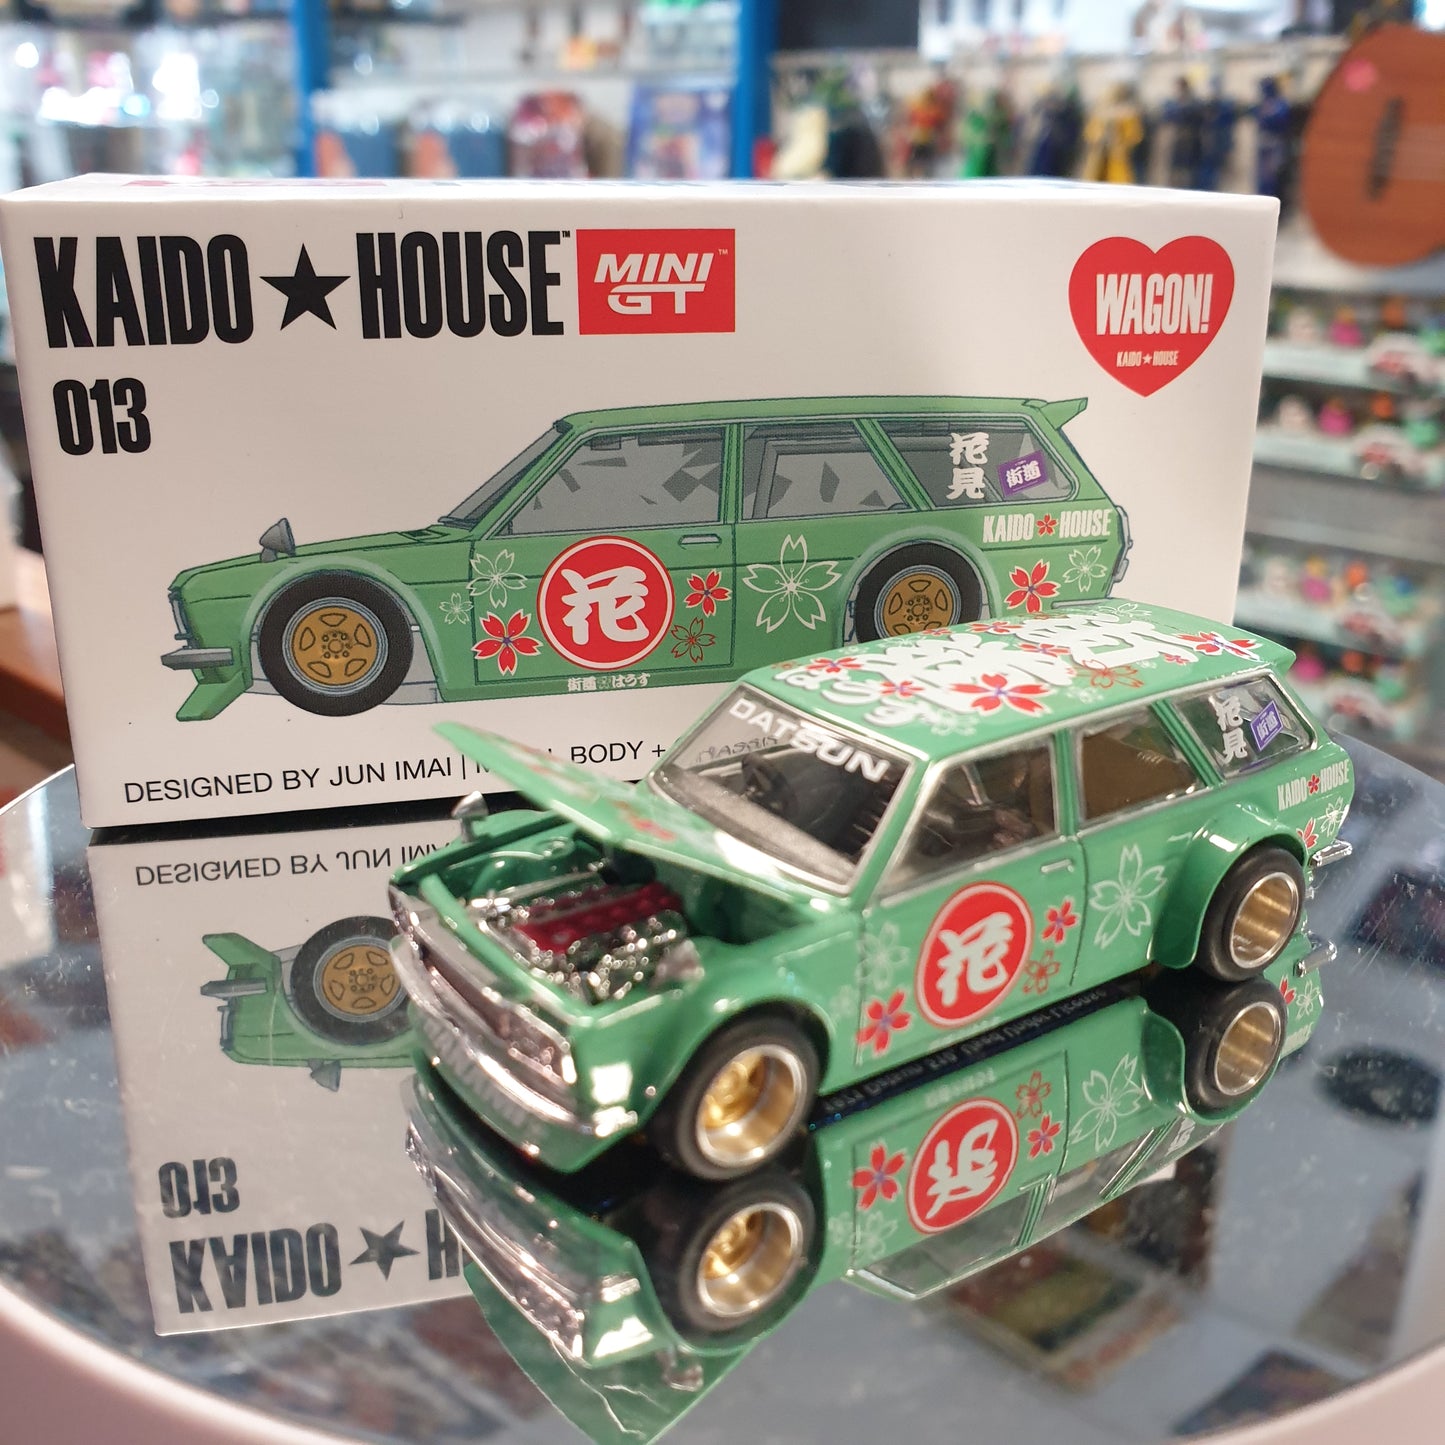 MiniGT - KAIDO House Datsun 510 Wagon Hanami V2 RHD